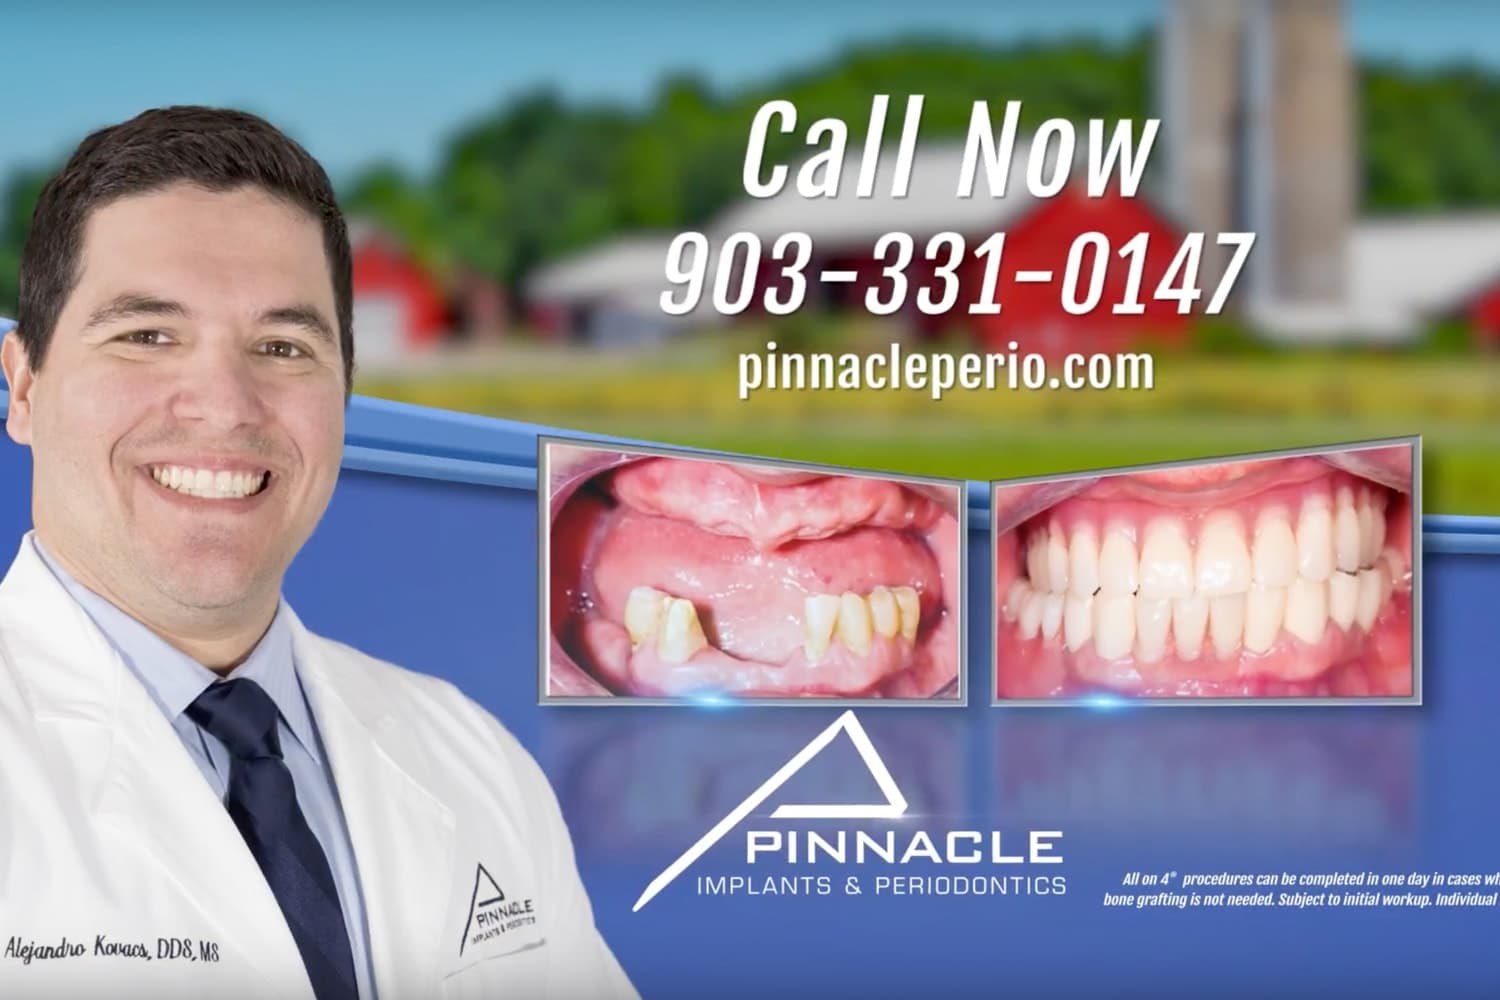 Pinnacle Implants & Periodontics Dental Marketing